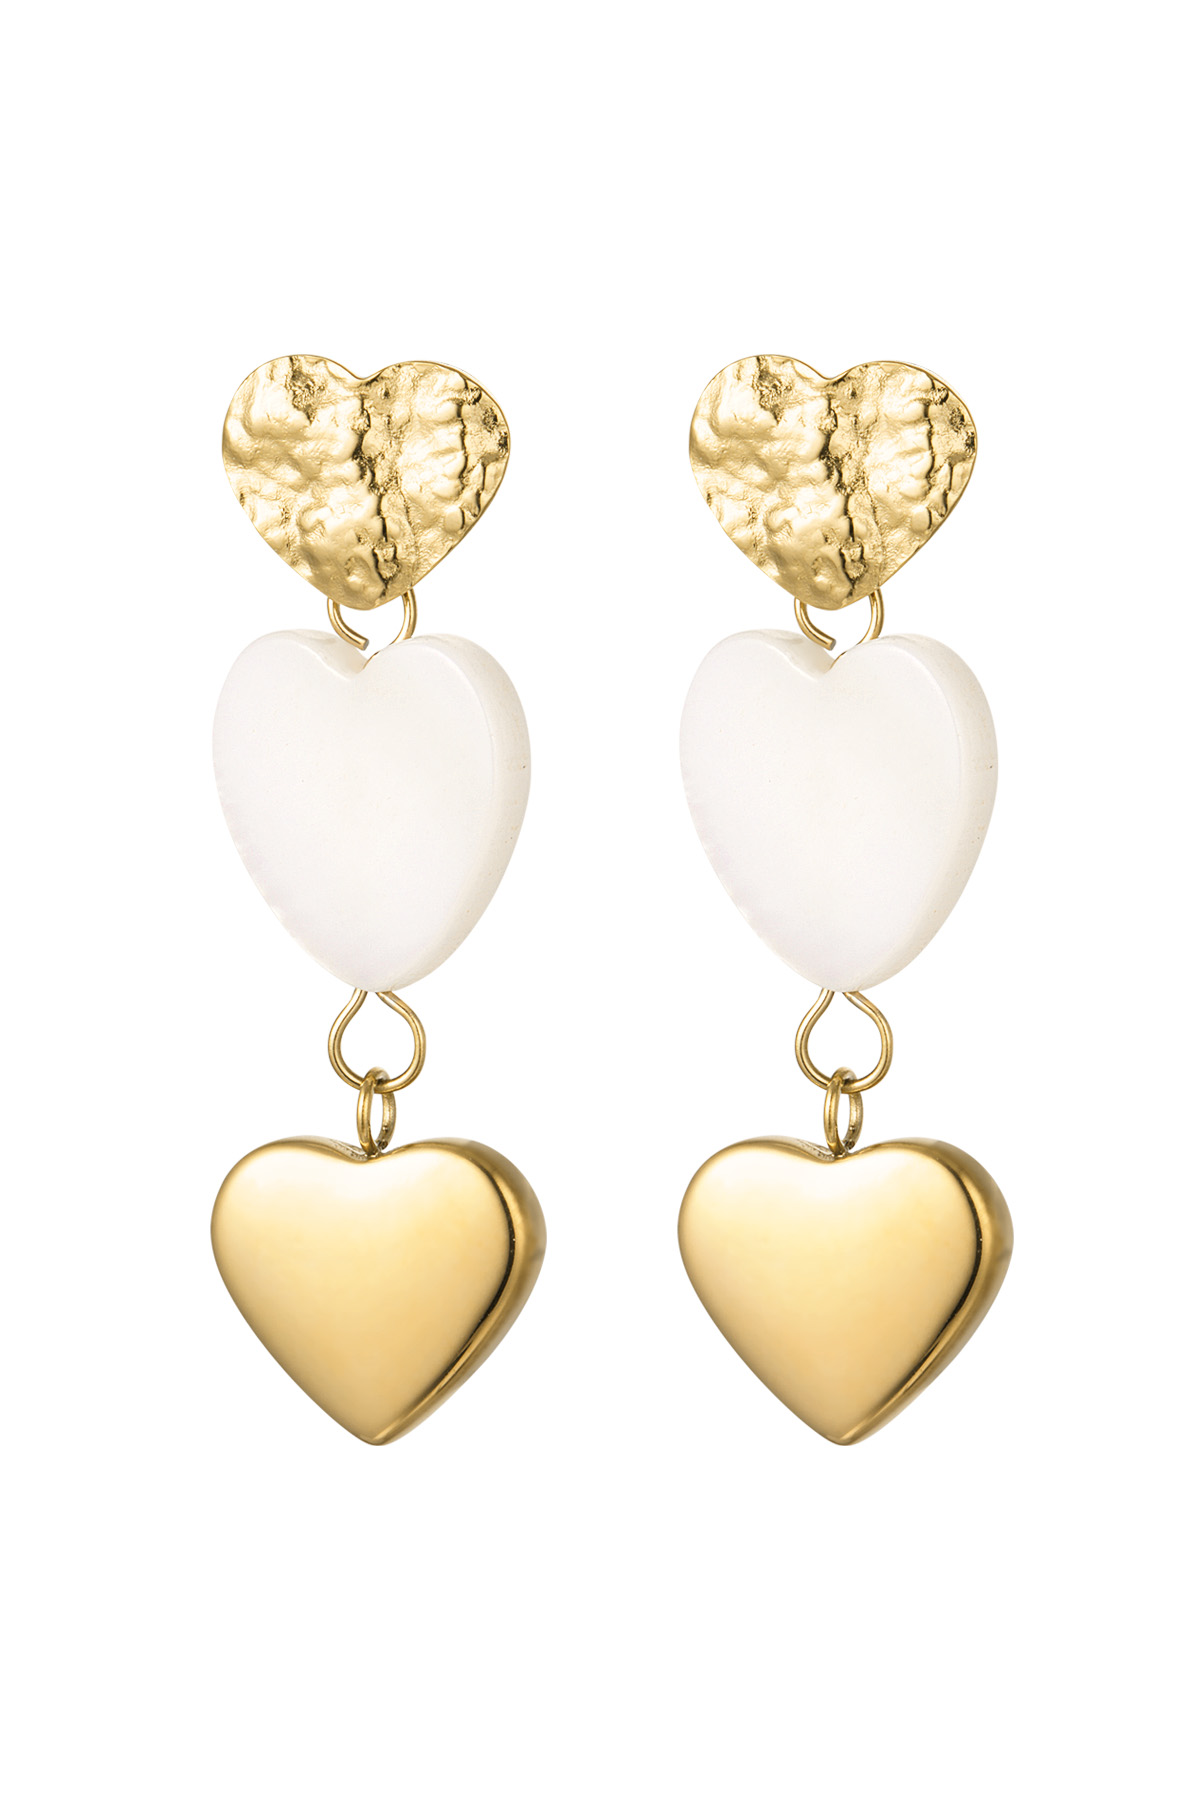 Earrings 3 x heart in a row - gold Stainless Steel 